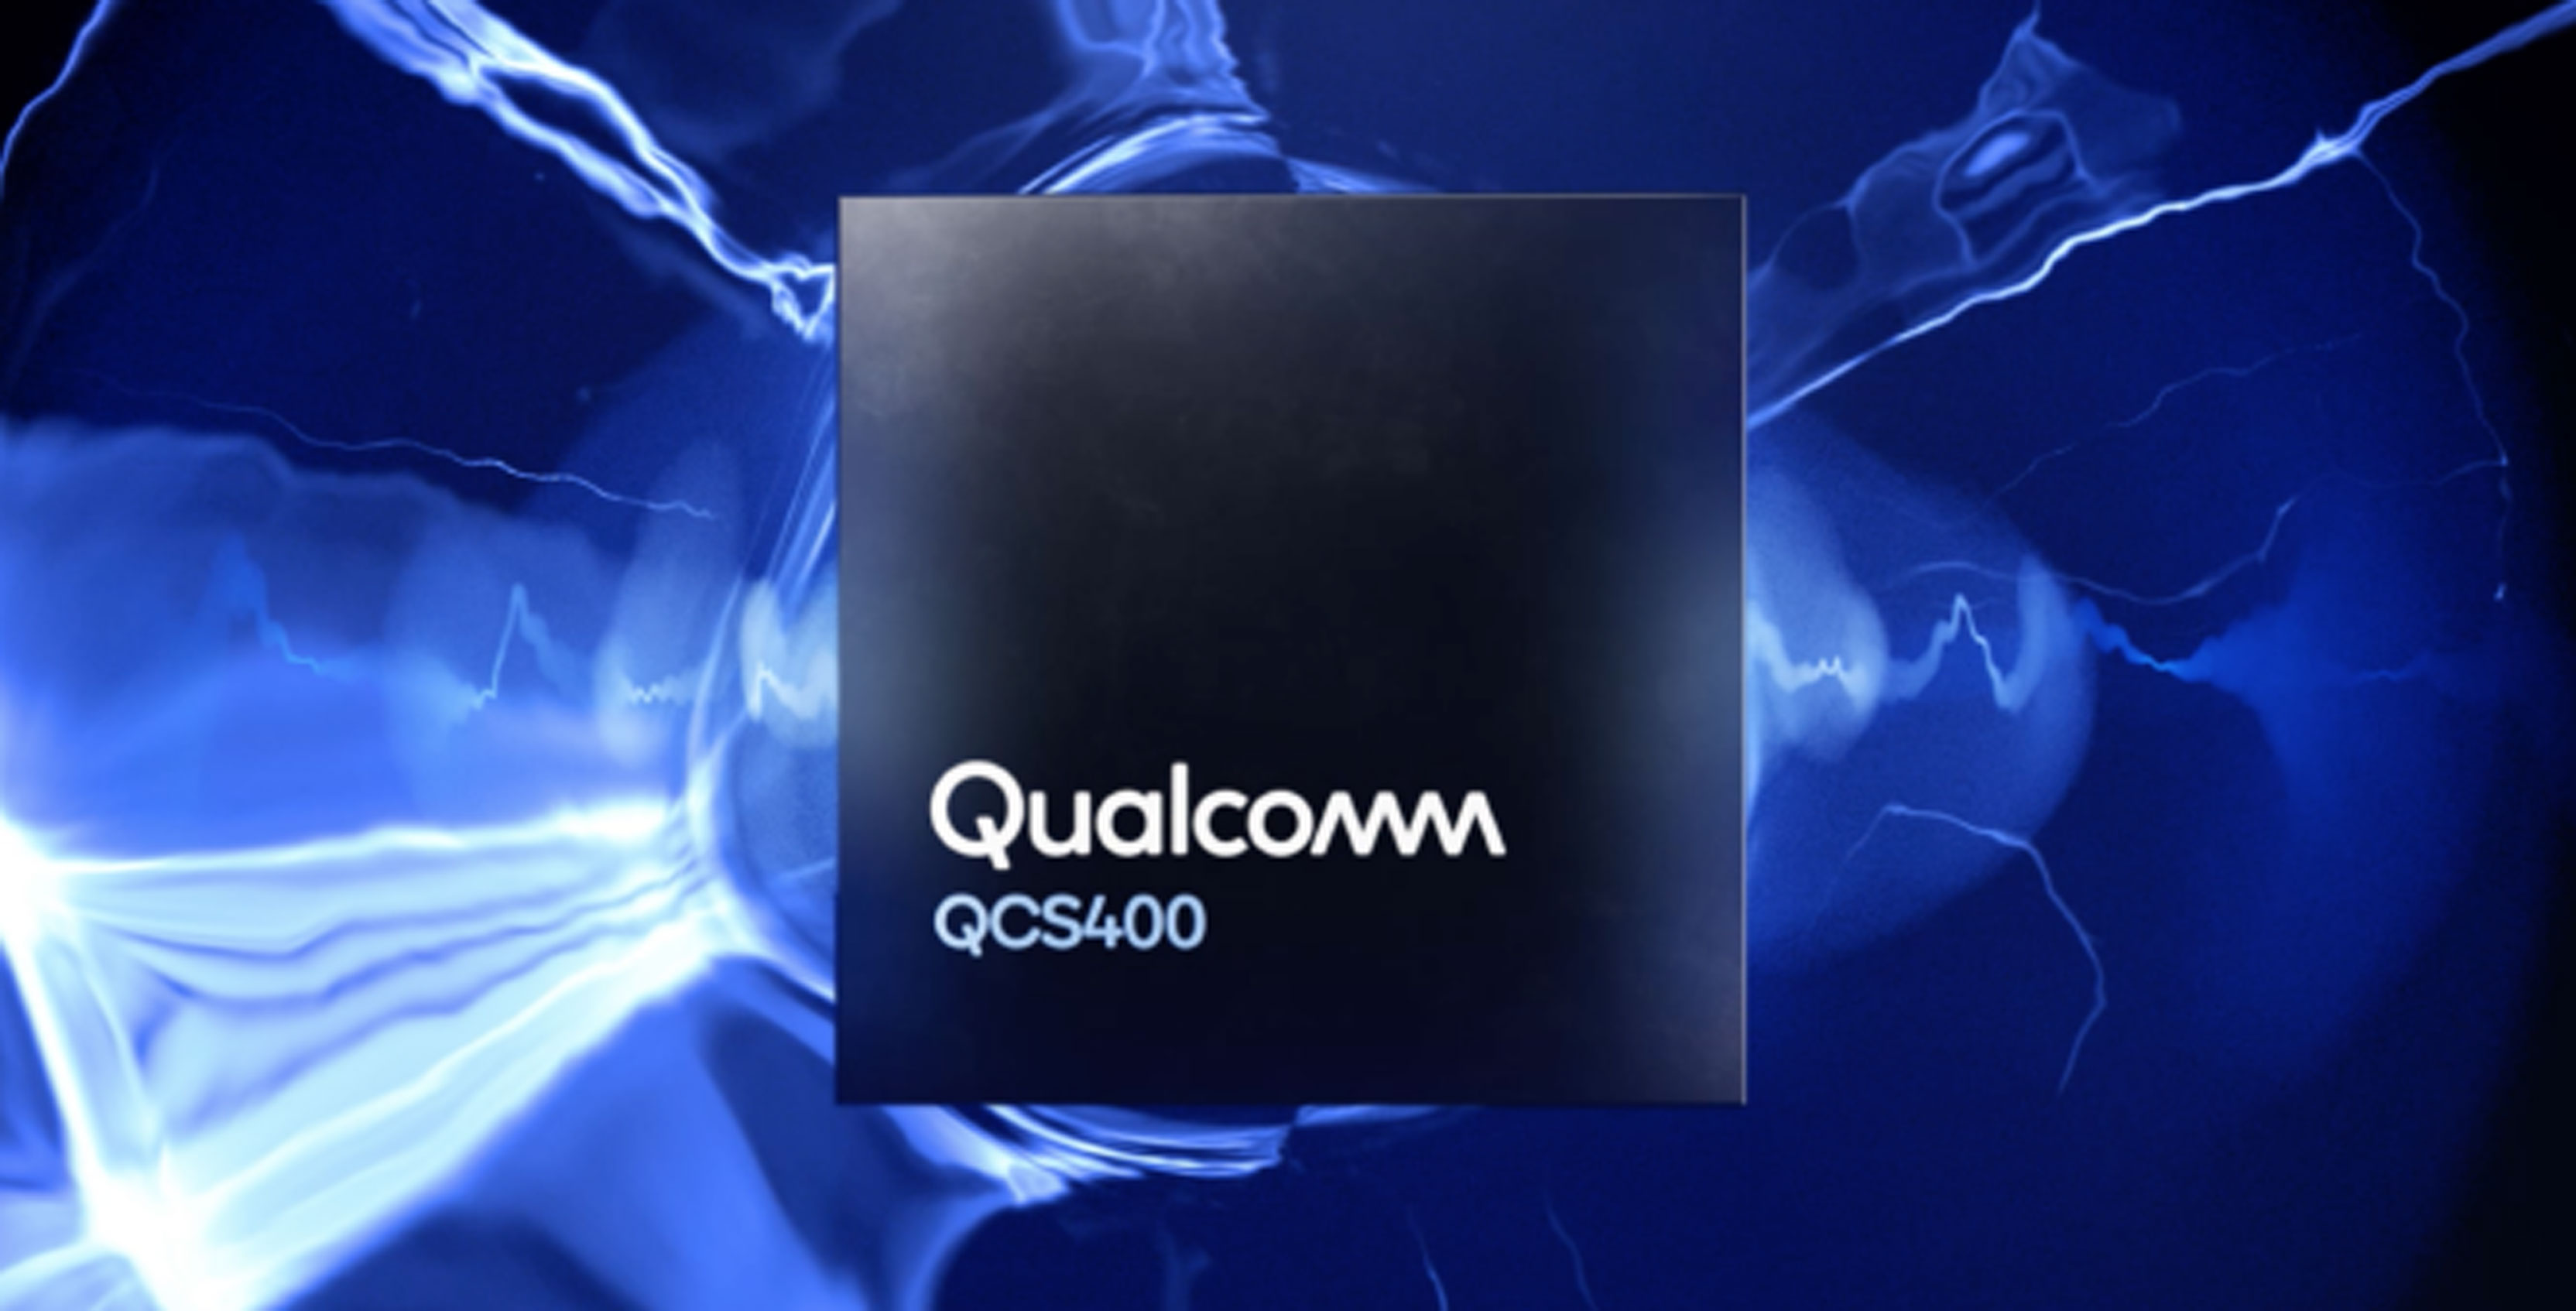 Qualcomm's new QCS400 chipset